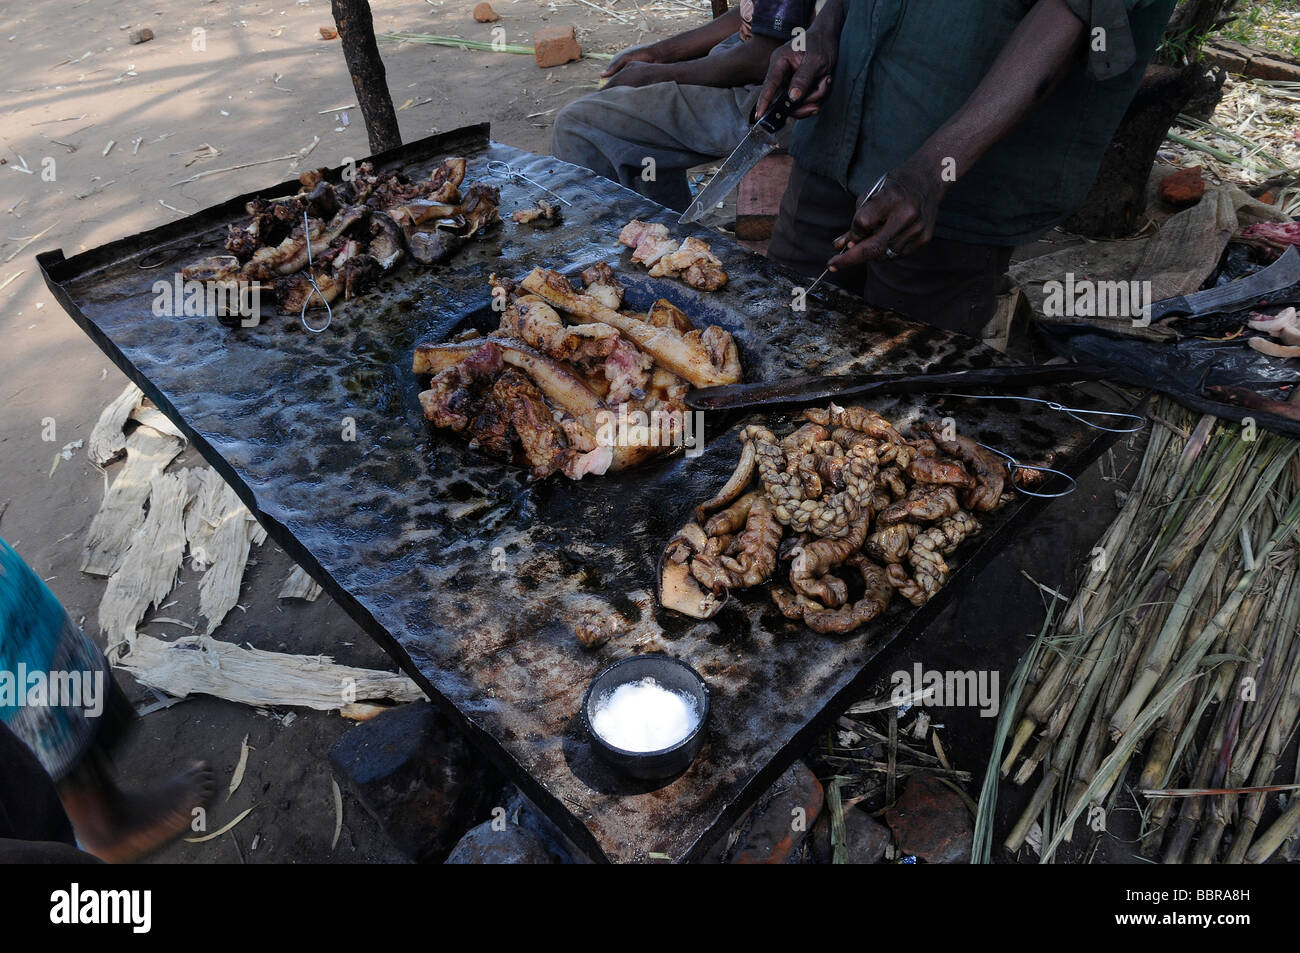 Fornitore preparano grigliate di carne in strada in Malawi in Africa centrale Foto Stock